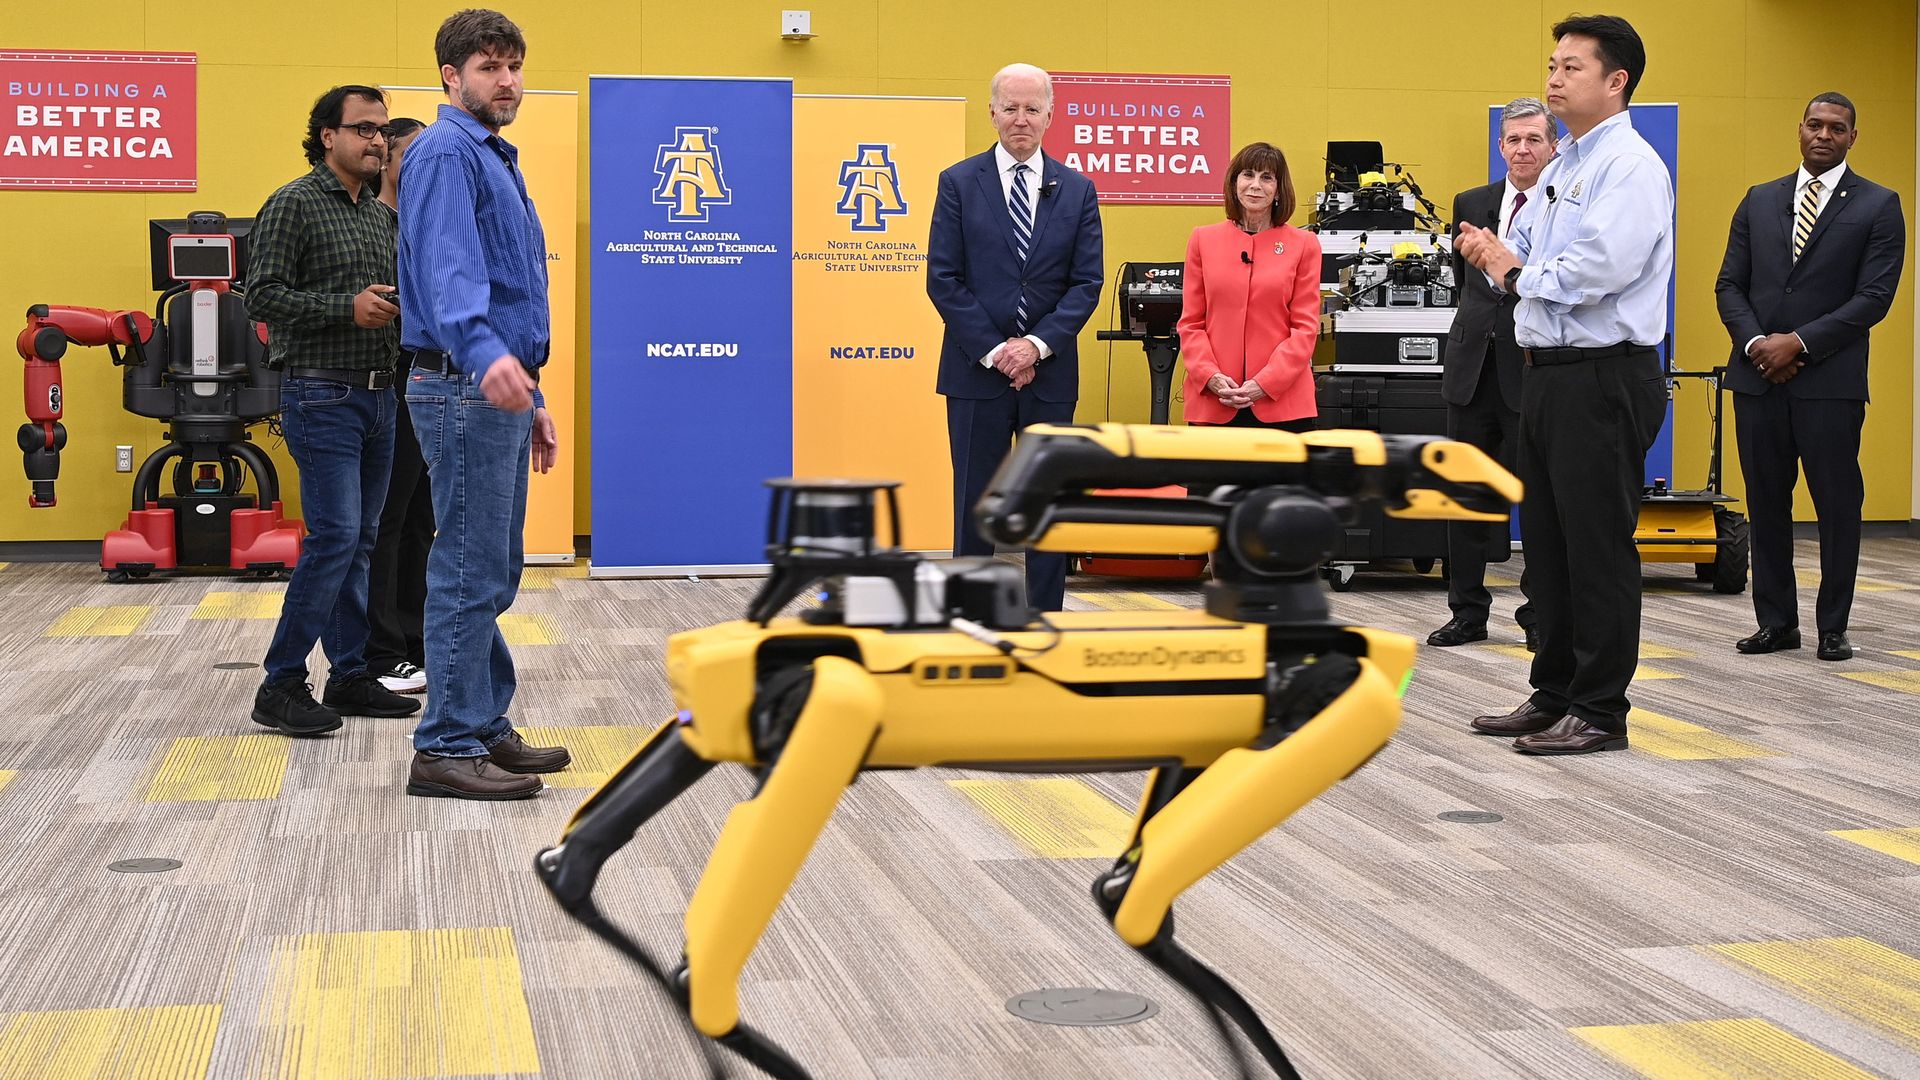 President Biden is seen looking at a robotic dog.